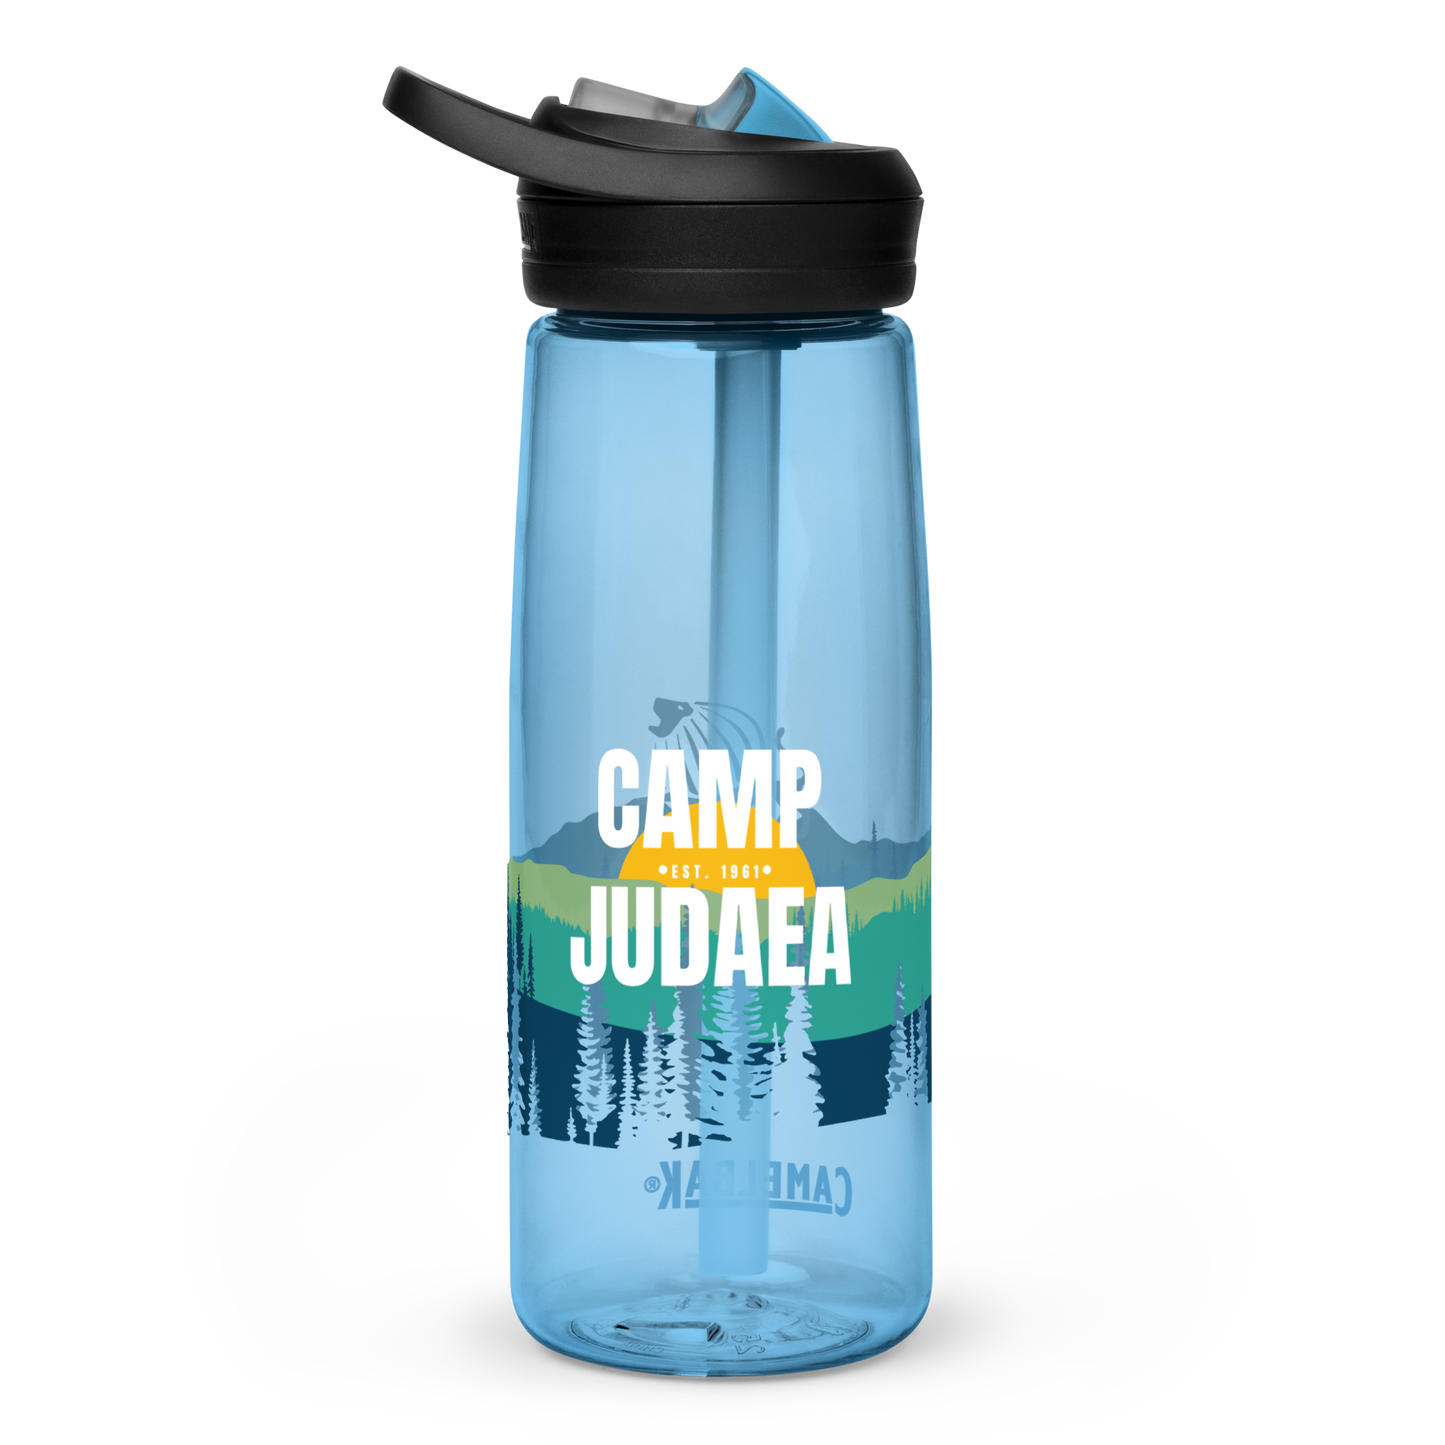 Personalized Mountain Sports Water Bottle